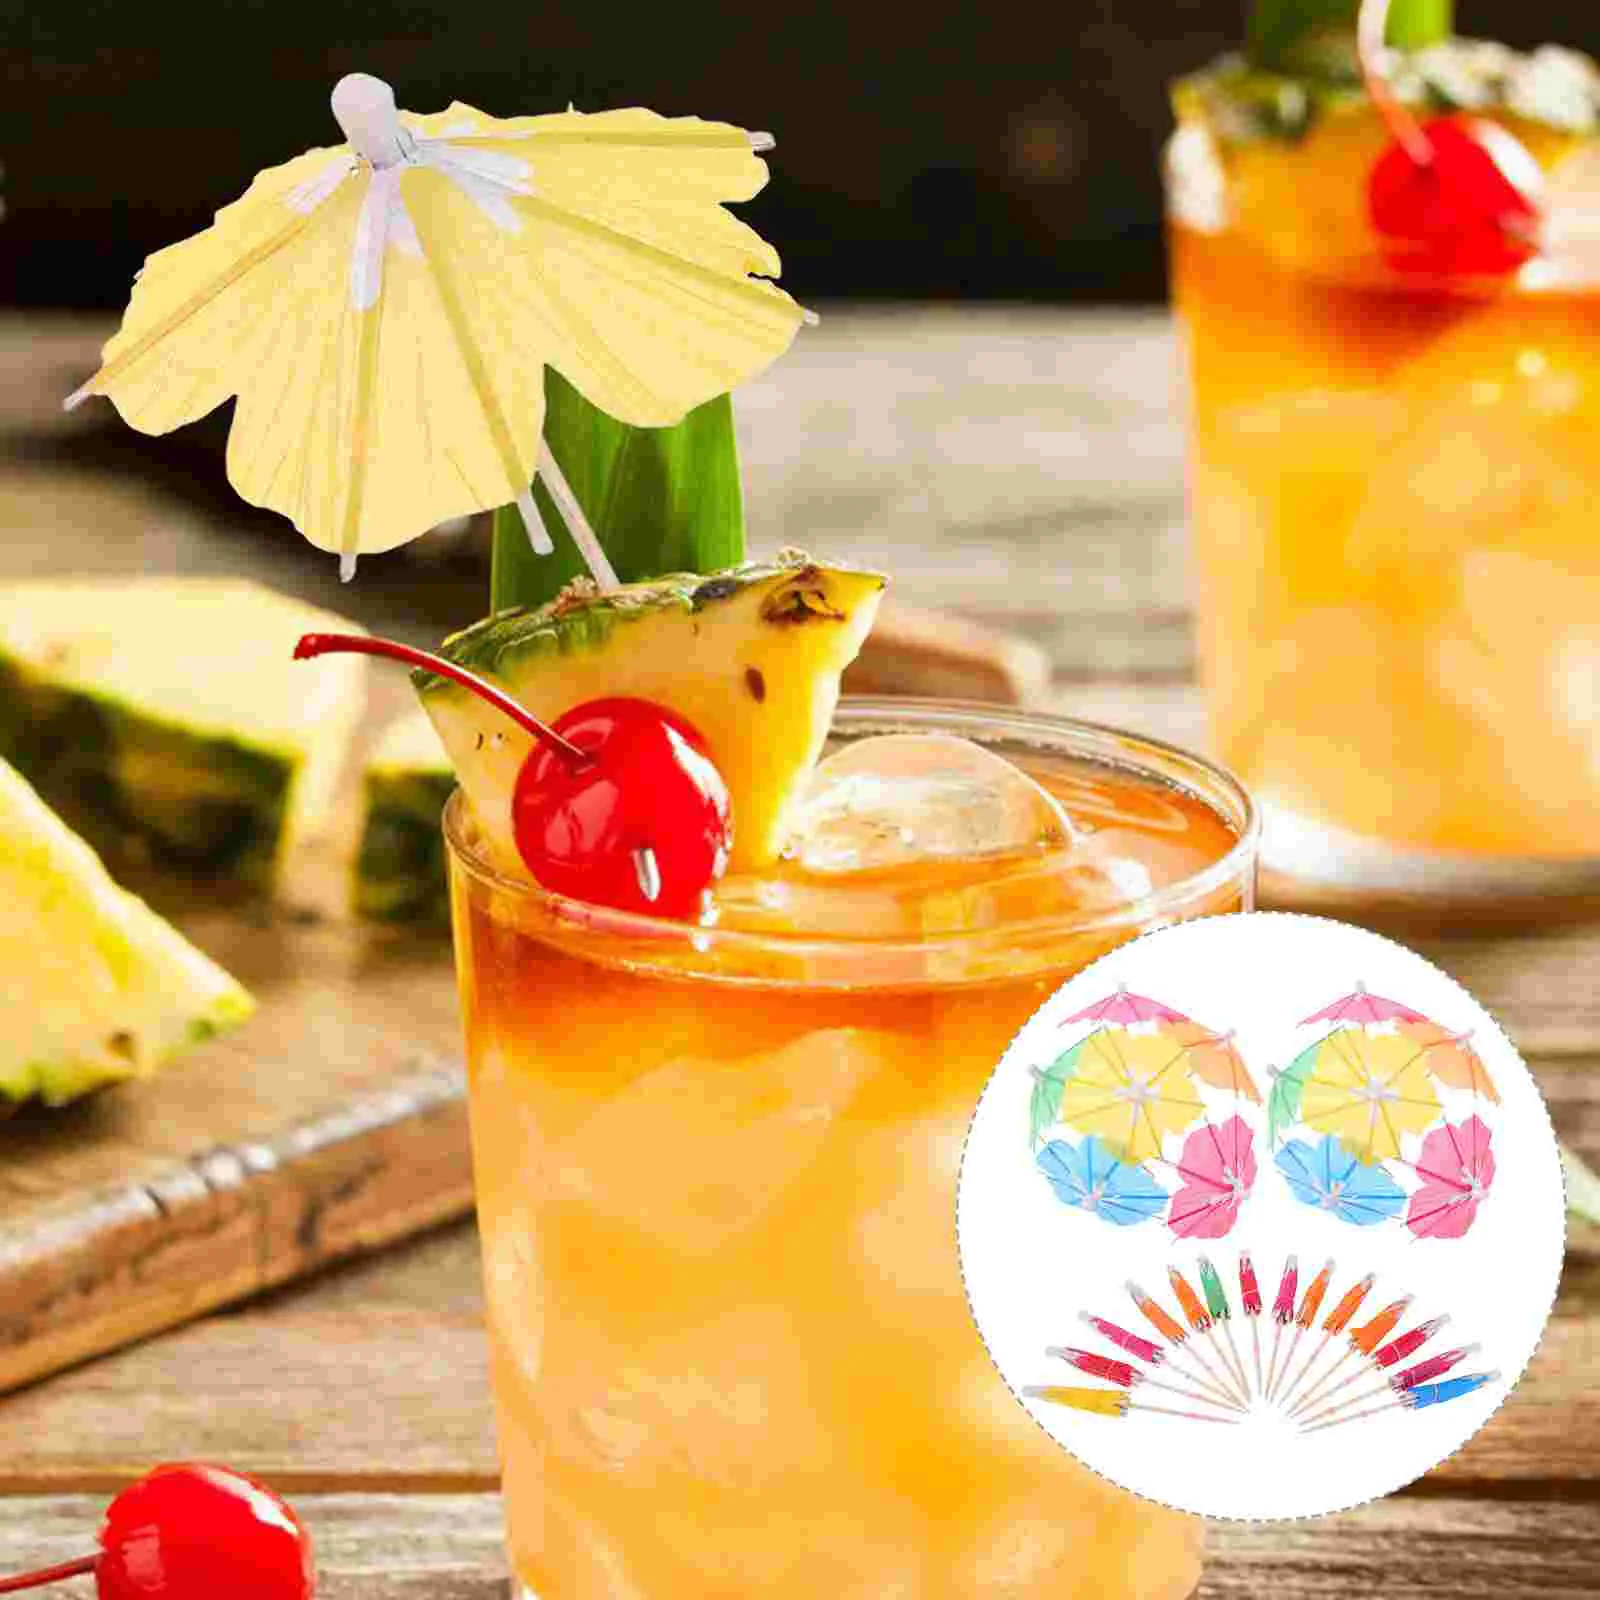 

100 Pcs Petal Cocktail Decoration Card Insert Small Flower Umbrella Sign Toothpicks Parasols Wood Decorations for Drinks